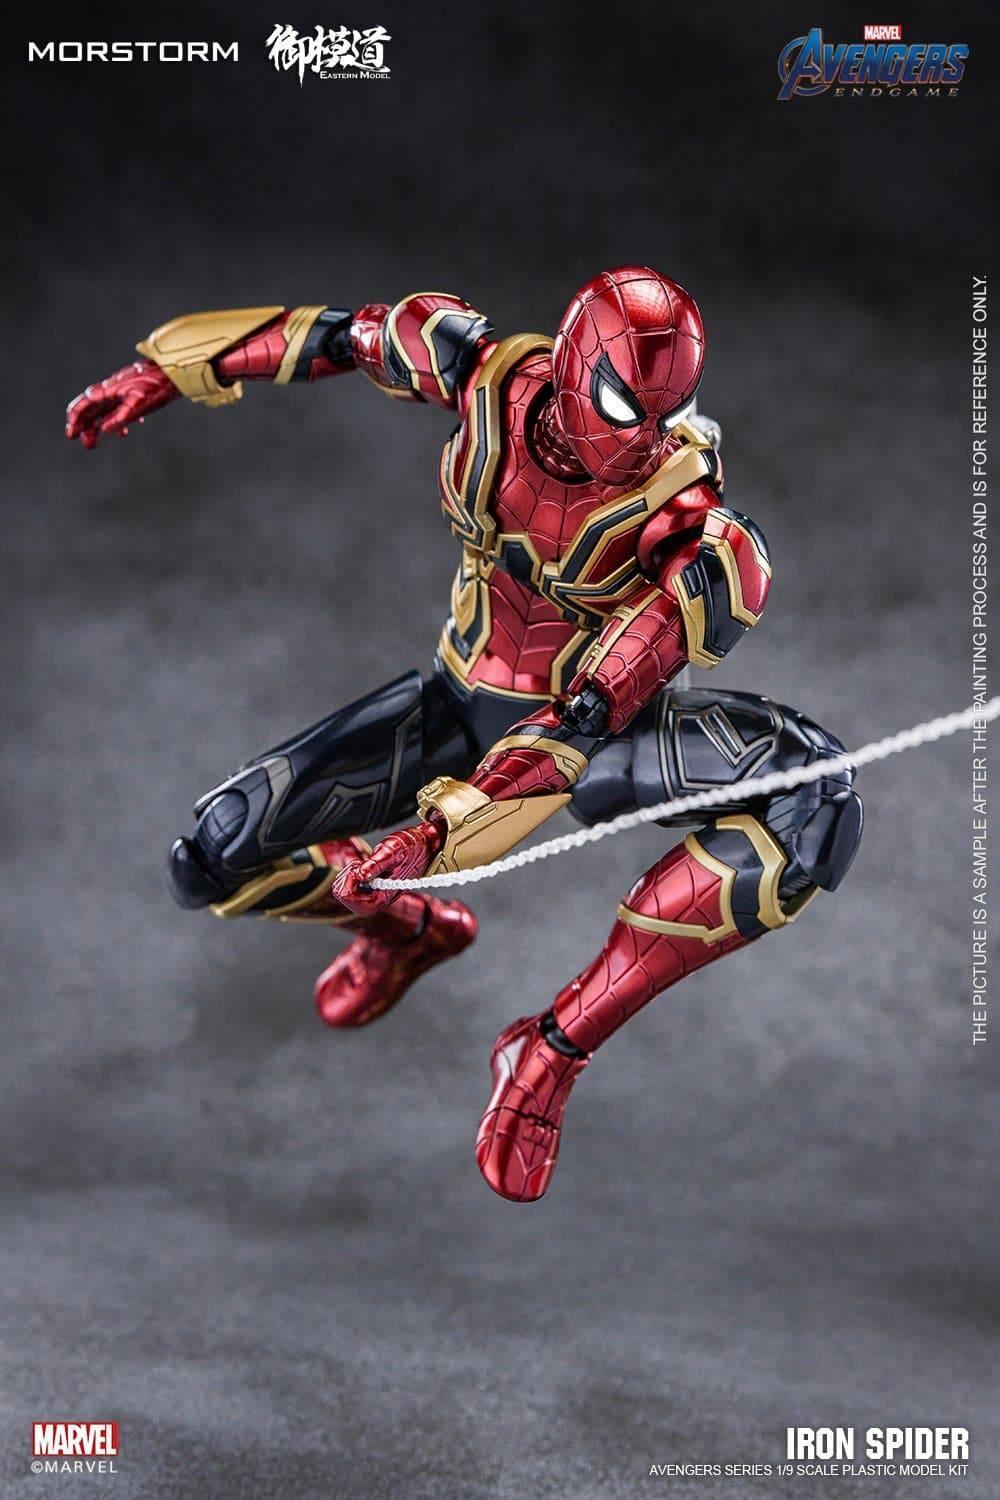 Morstorm - 1:9 Spider-man Iron Spider Assembly Kit